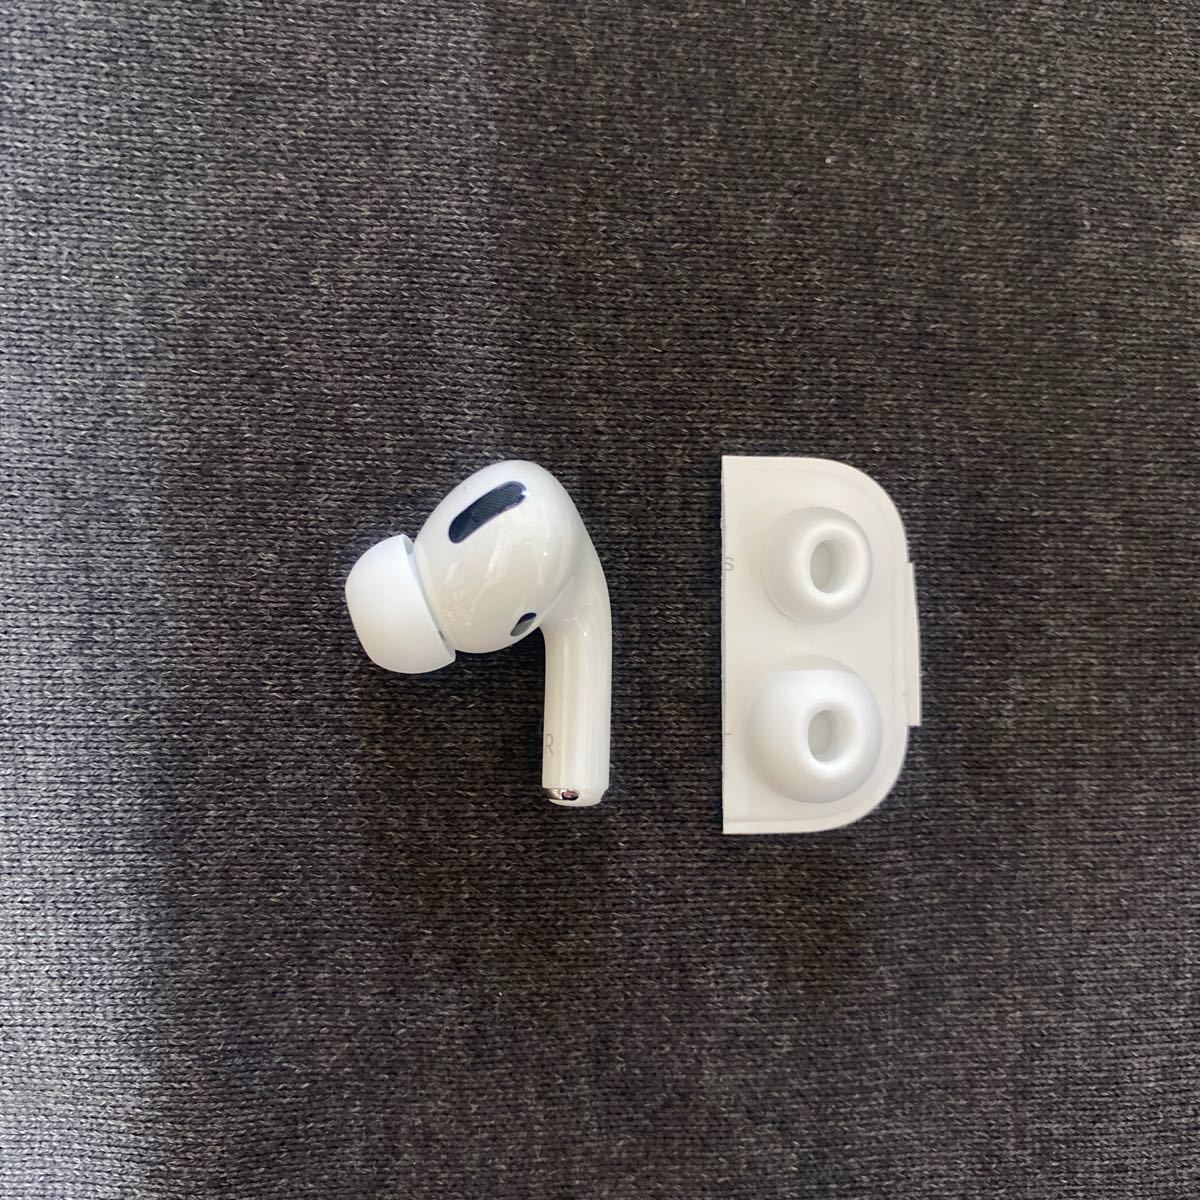 Apple純正 AirPods Pro 右 イヤホン MWP22J/A 右耳のみ 新品未使用品